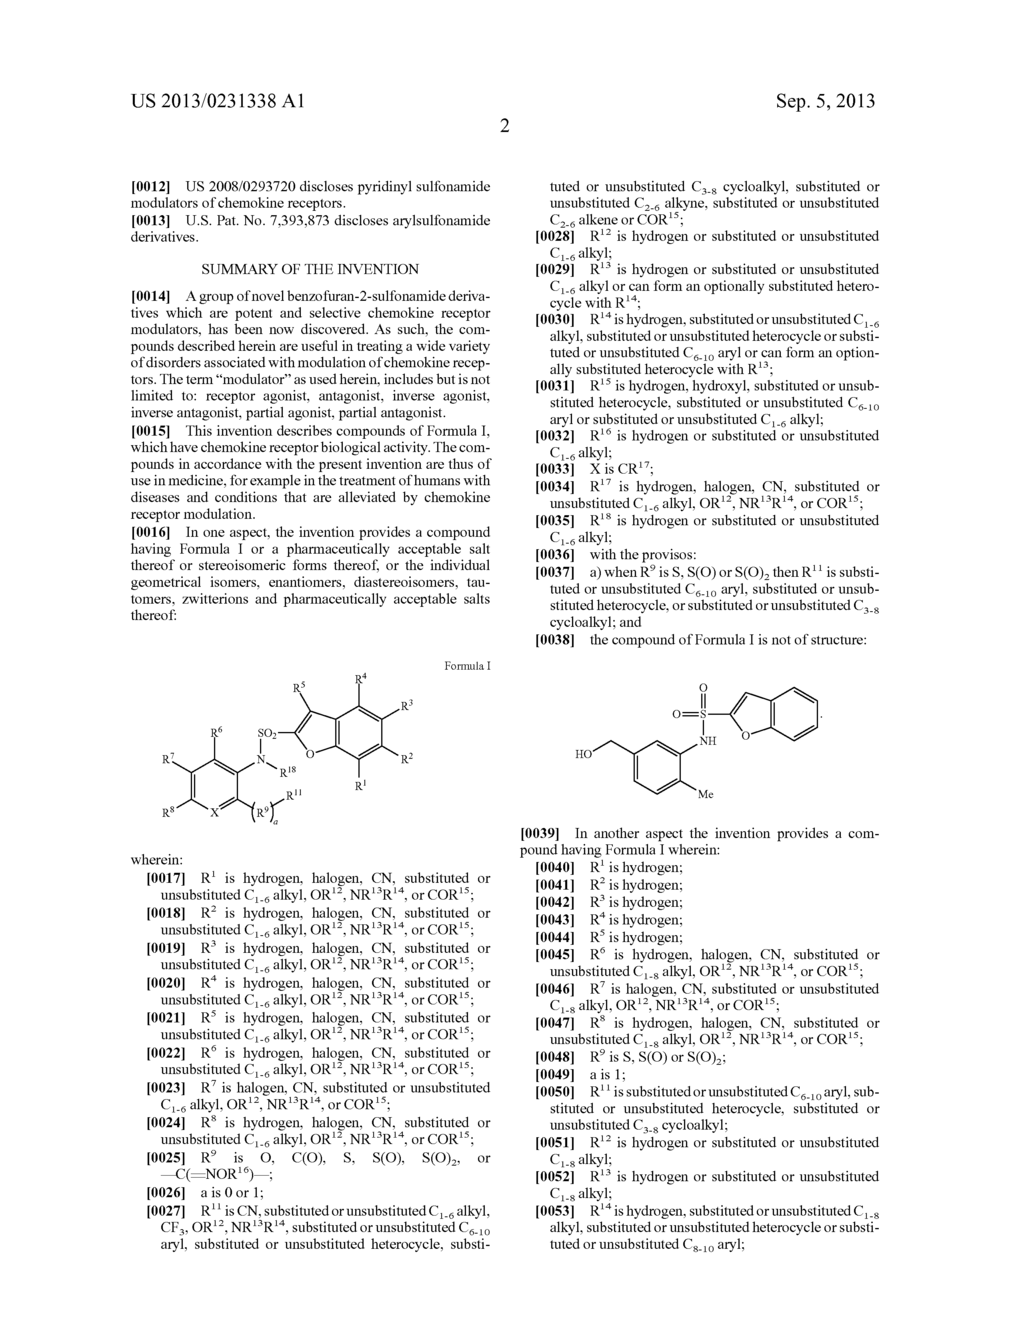 BENZOFURAN-2-SULFONAMIDES DERIVATIVES AS CHEMOKINE RECEPTOR MODULATORS - diagram, schematic, and image 03